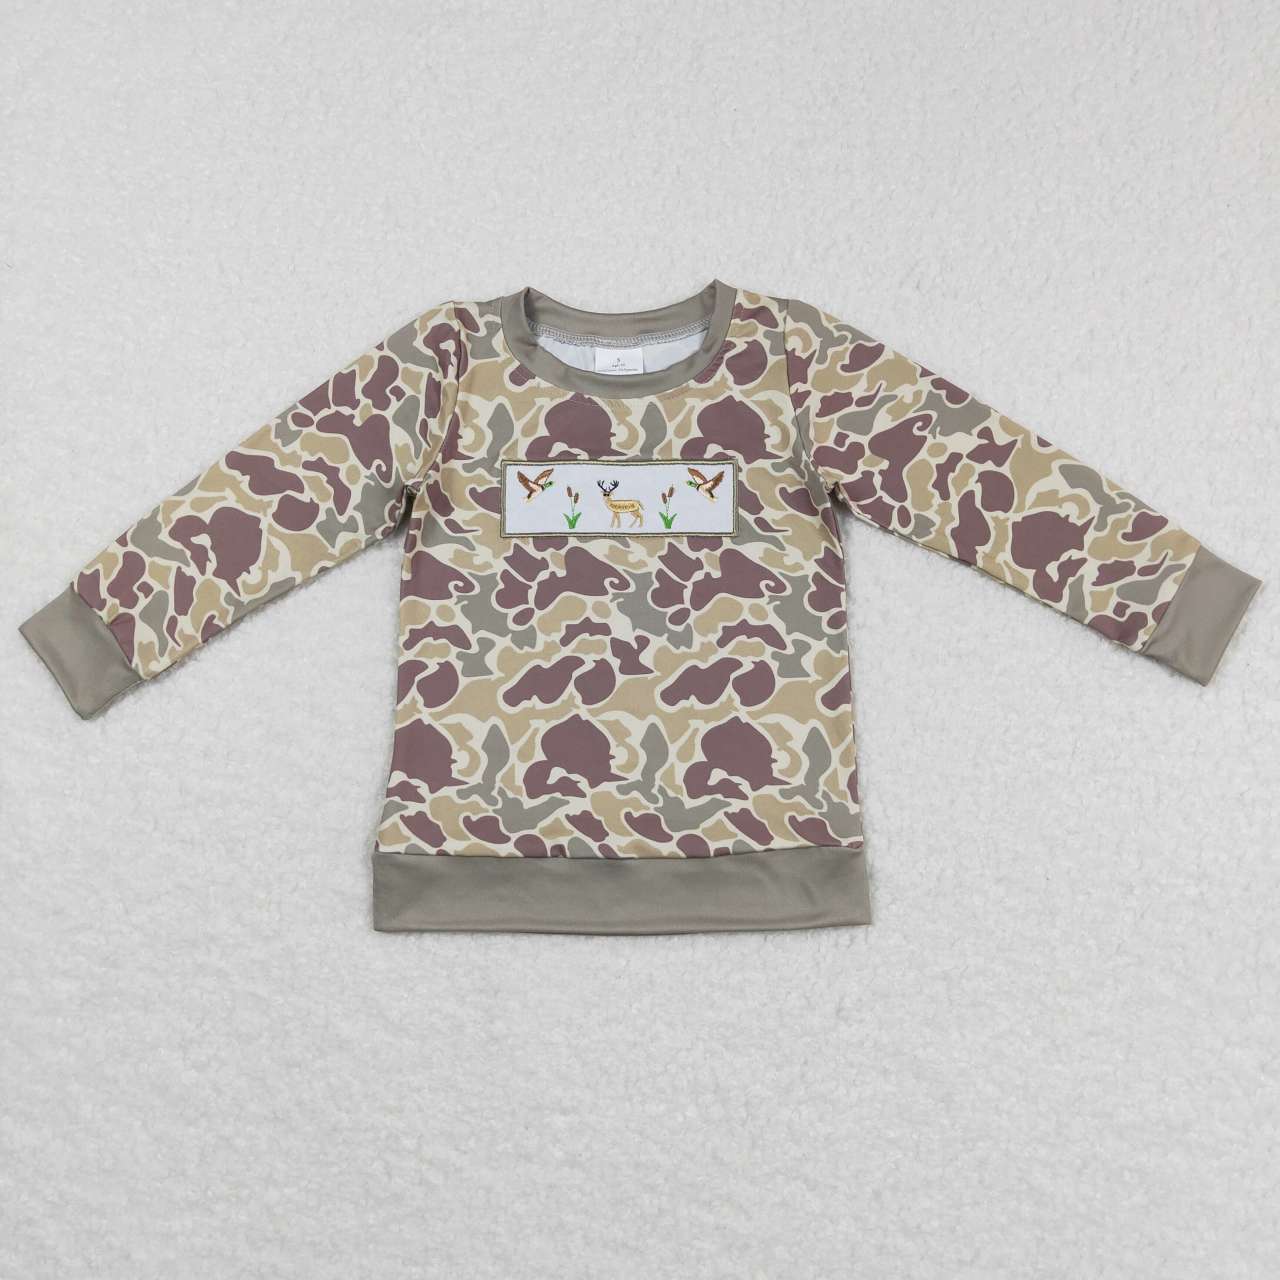 BT0378 Camo Duck Deer Embroidery Print Kids Tee Shirts Top